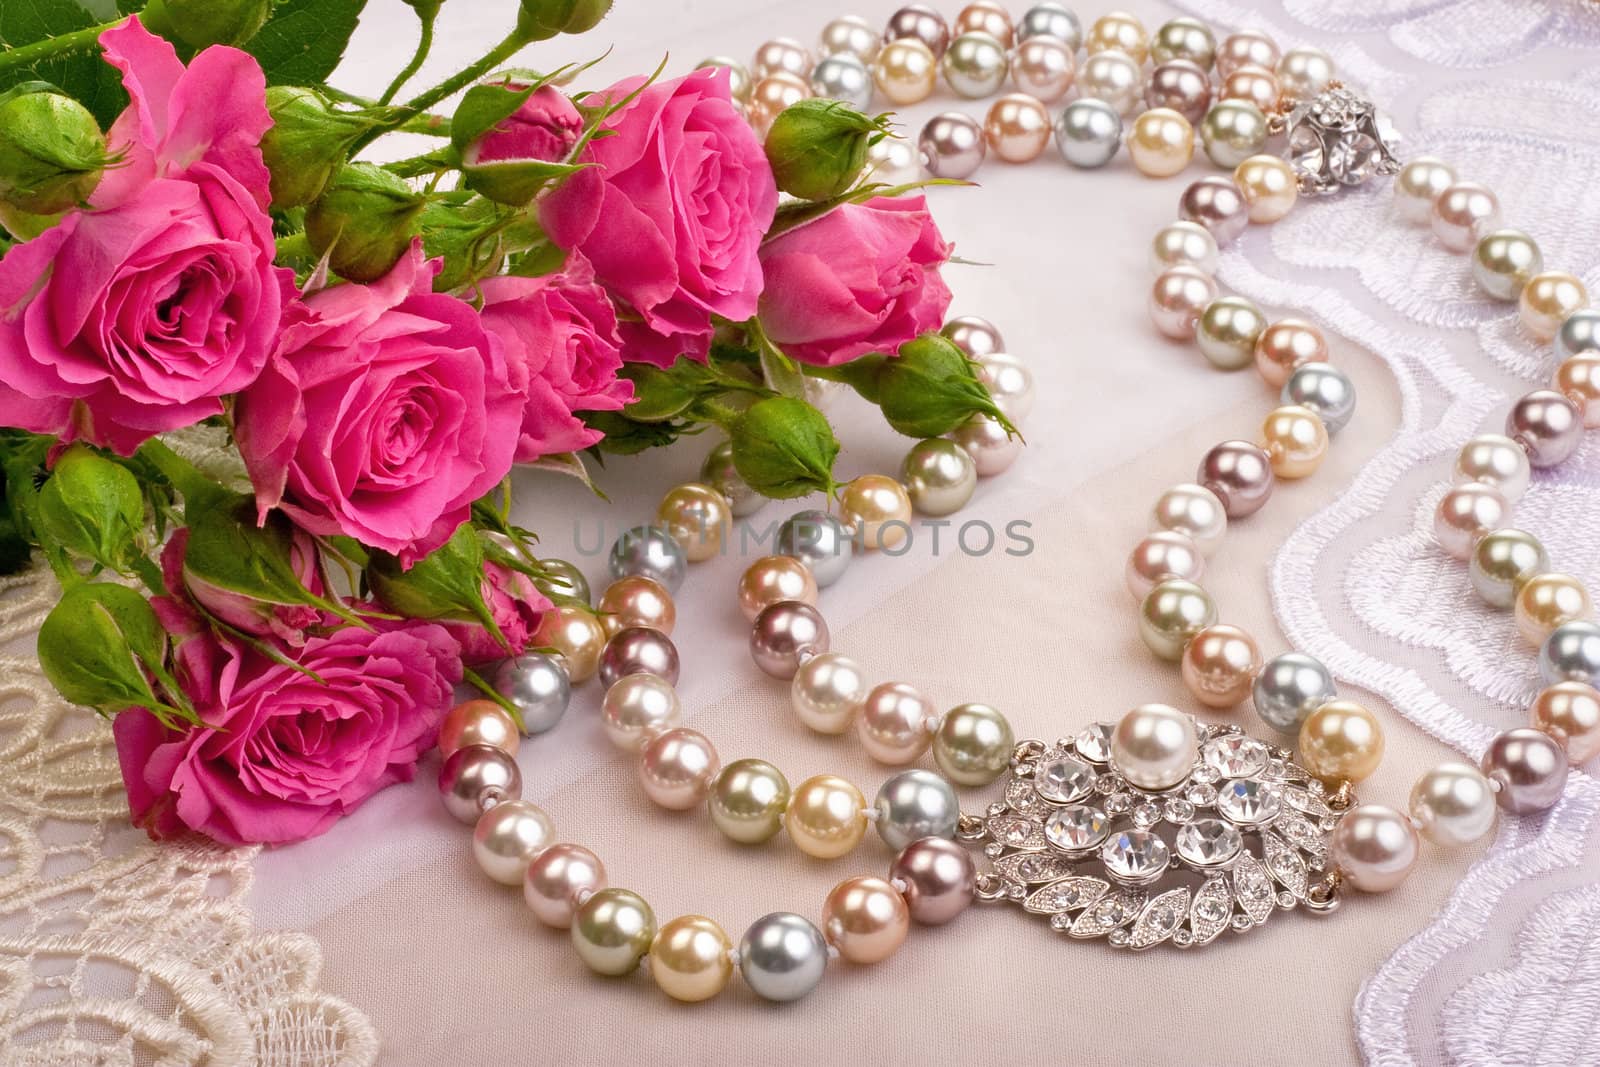 Roses and luxury closeup by igor_stramyk